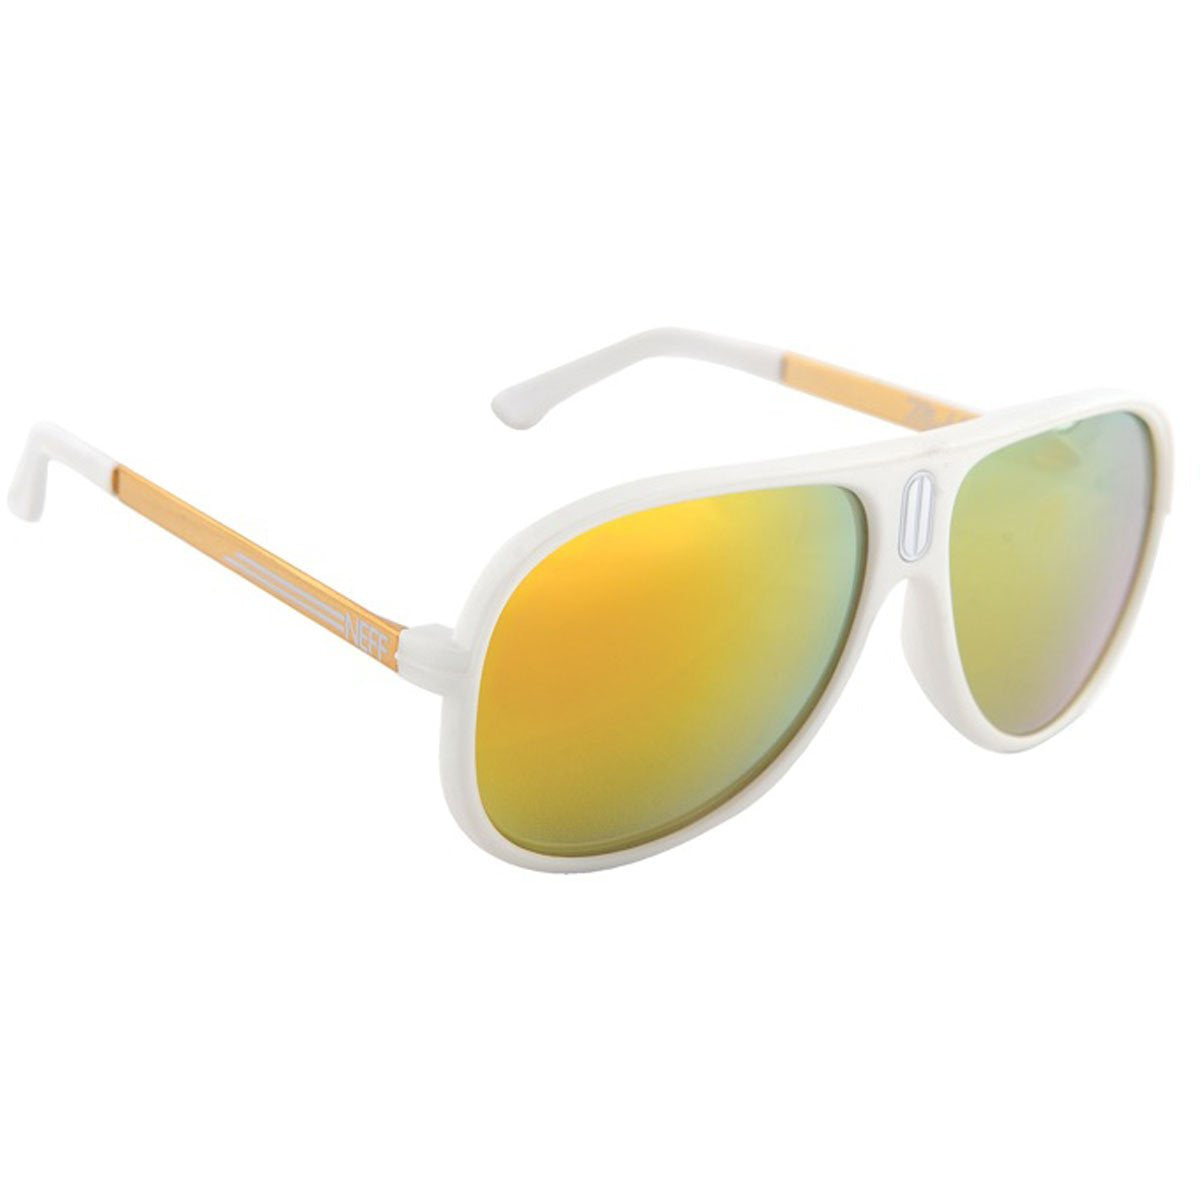 Neff Malibu Men's Lifestyle Sunglasses (BRAND NEW)